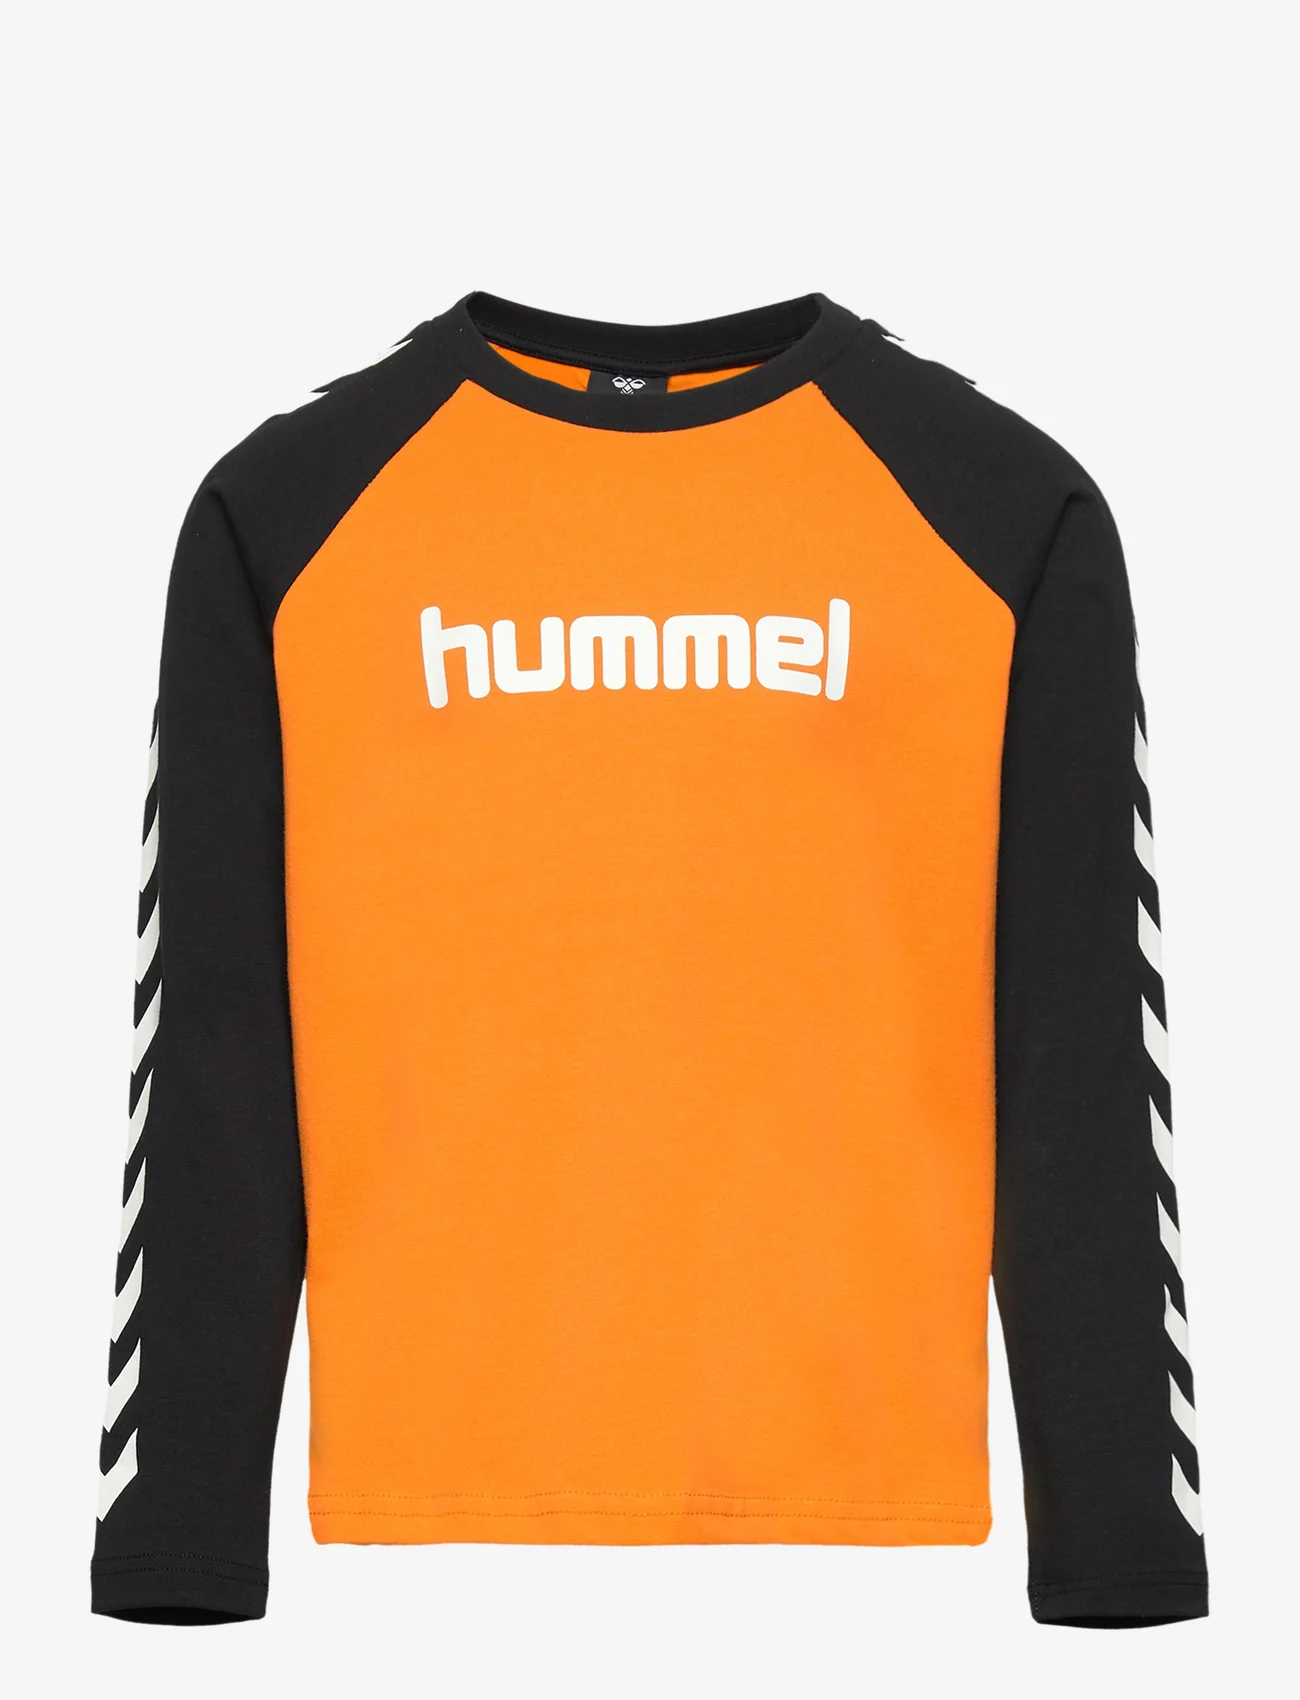 Hummel - hmlBOYS T-SHIRT L/S - long-sleeved - persimmon orange - 0